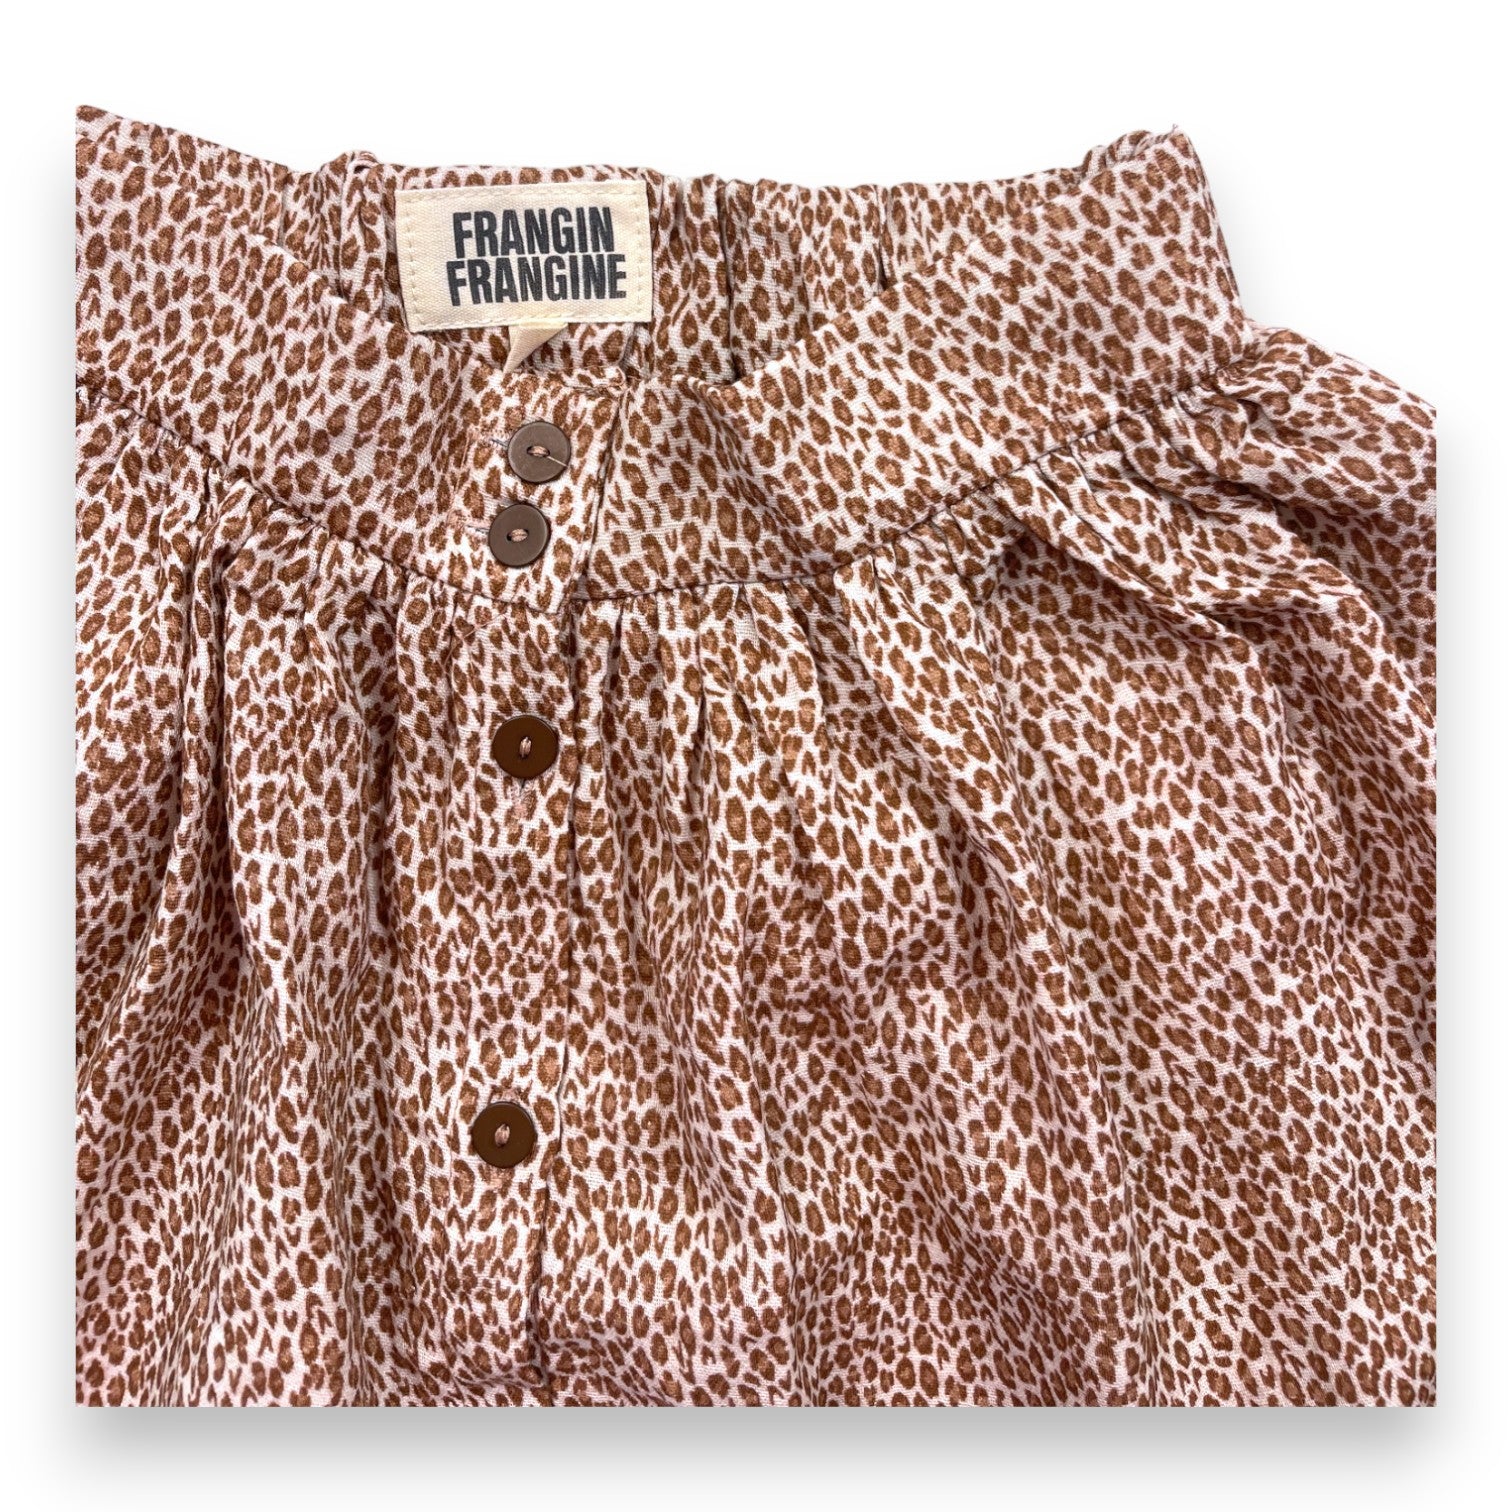 FRANGIN FRANGINE - Jupe boutonnée motif léopard - 8 ans